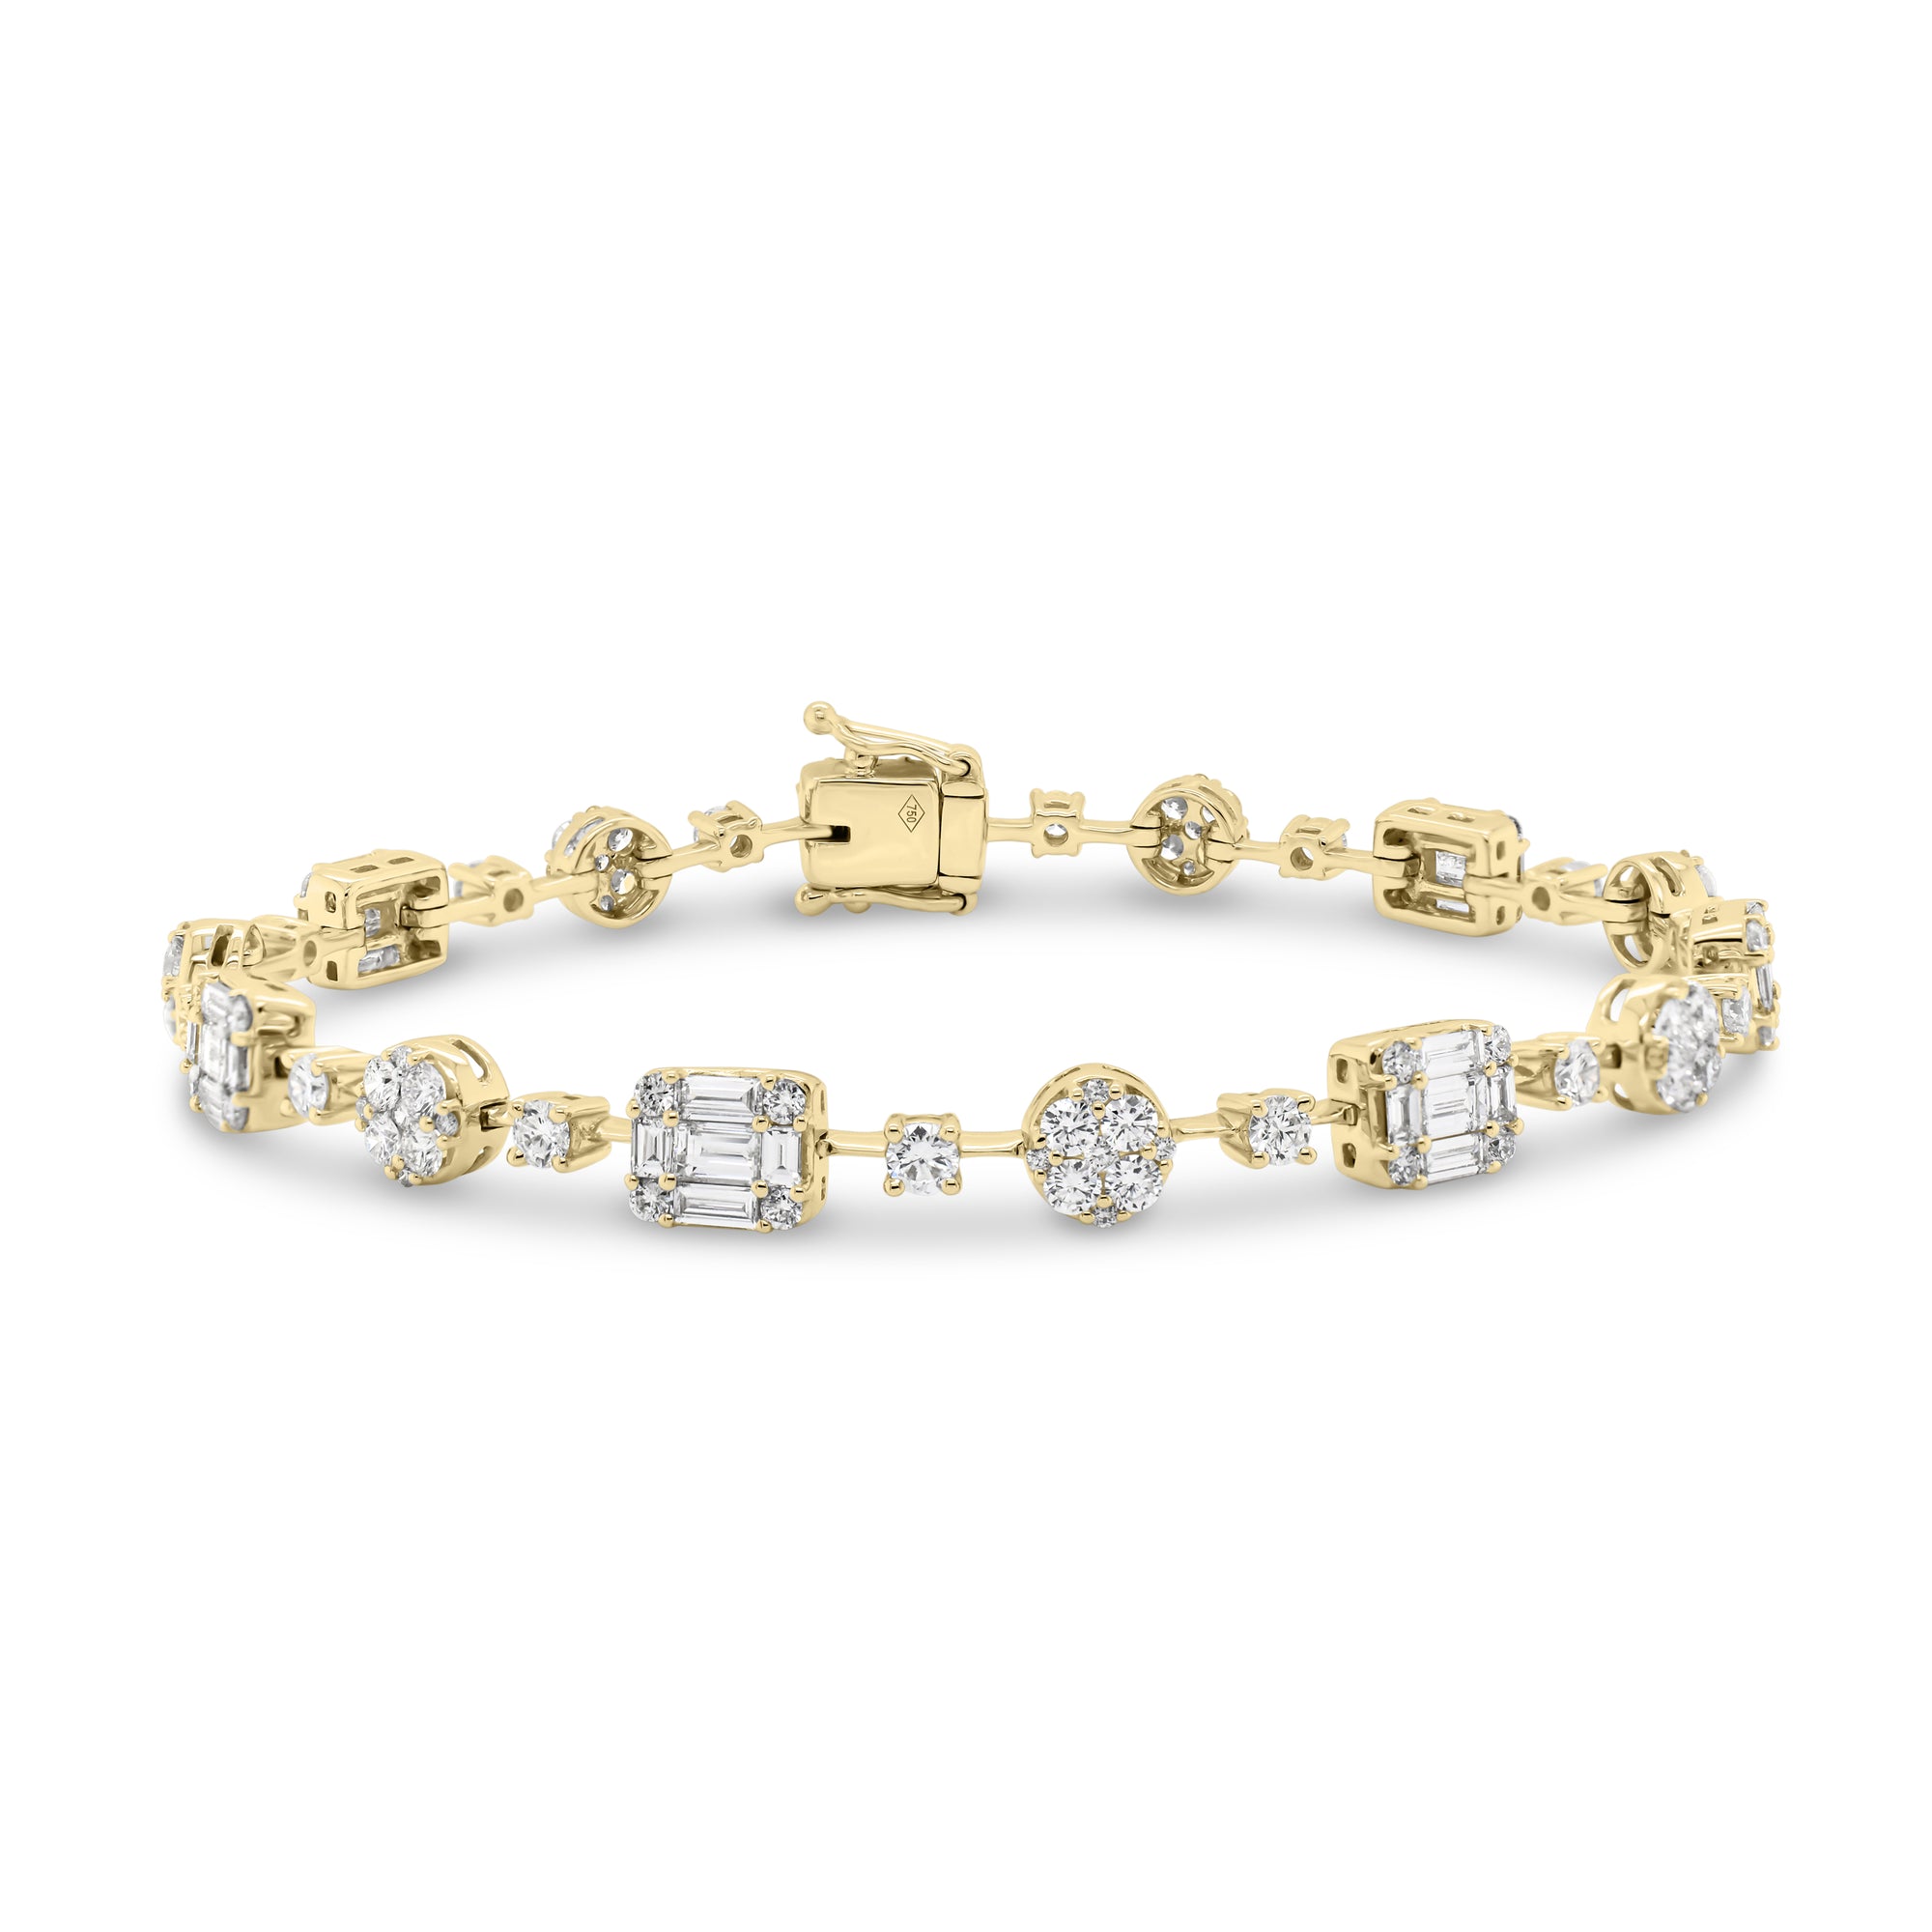 Diamond Circles & Rectangles Bangle Bracelet  - 18K gold weighing 10.70 grams  - 35 straight baguettes totaling 1.54 carats  - 105 round diamonds totaling 1.97 carats